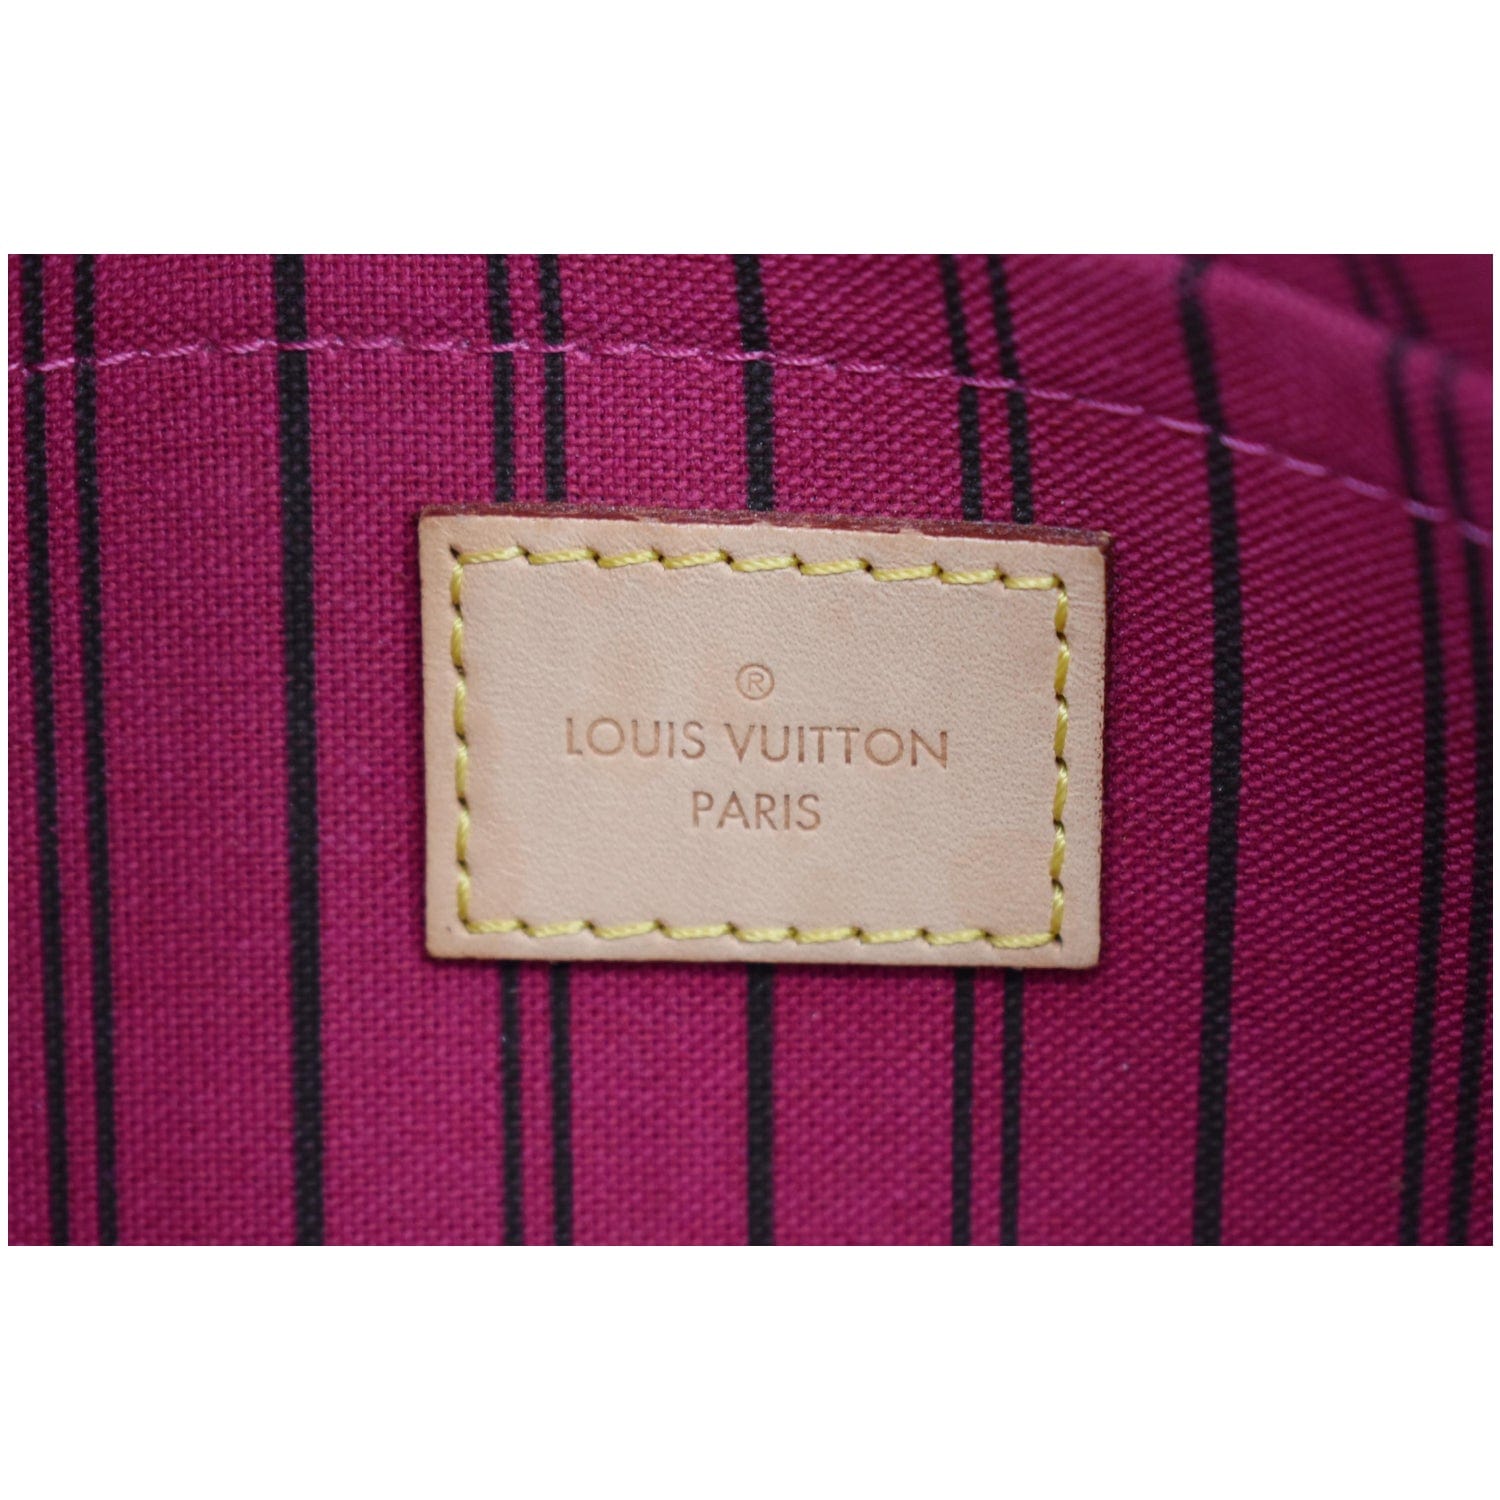 Louis Vuitton Neverfull pochette. $450 To purchase: Online website link in  bio Cmstmatthews.com #shopcm #cmstmatthews #shoplocal…